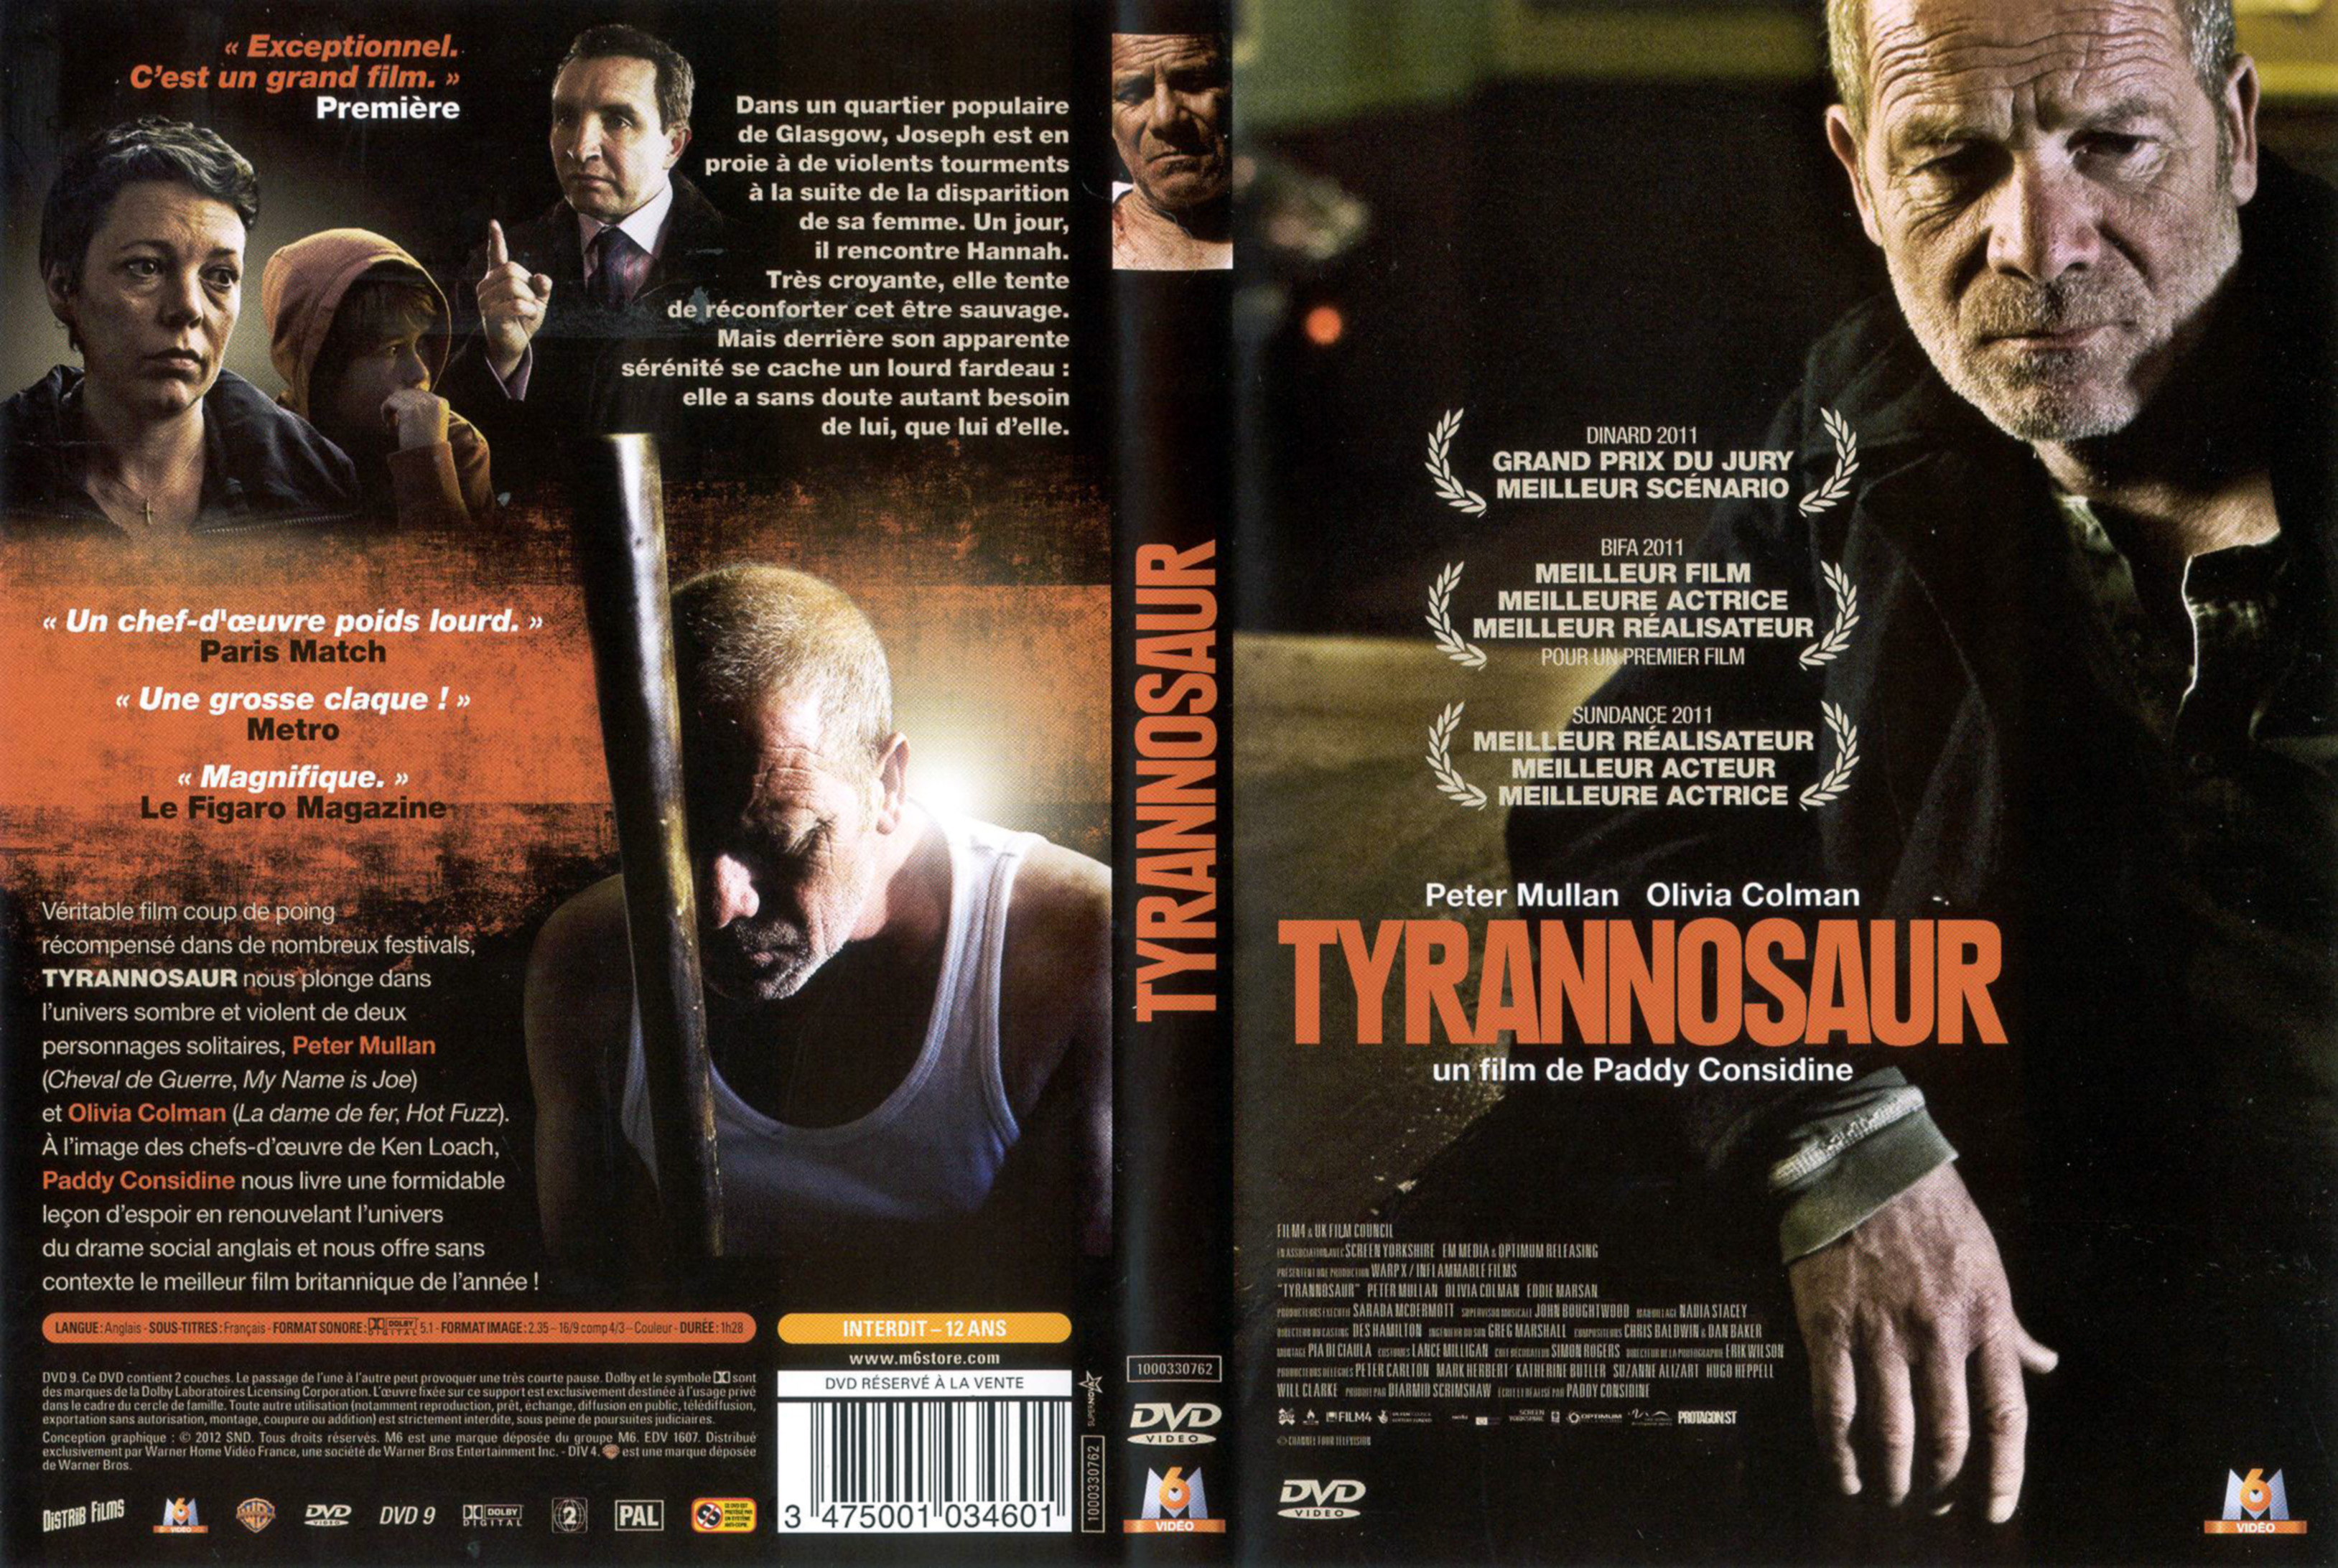 Jaquette DVD Tyrannosaur